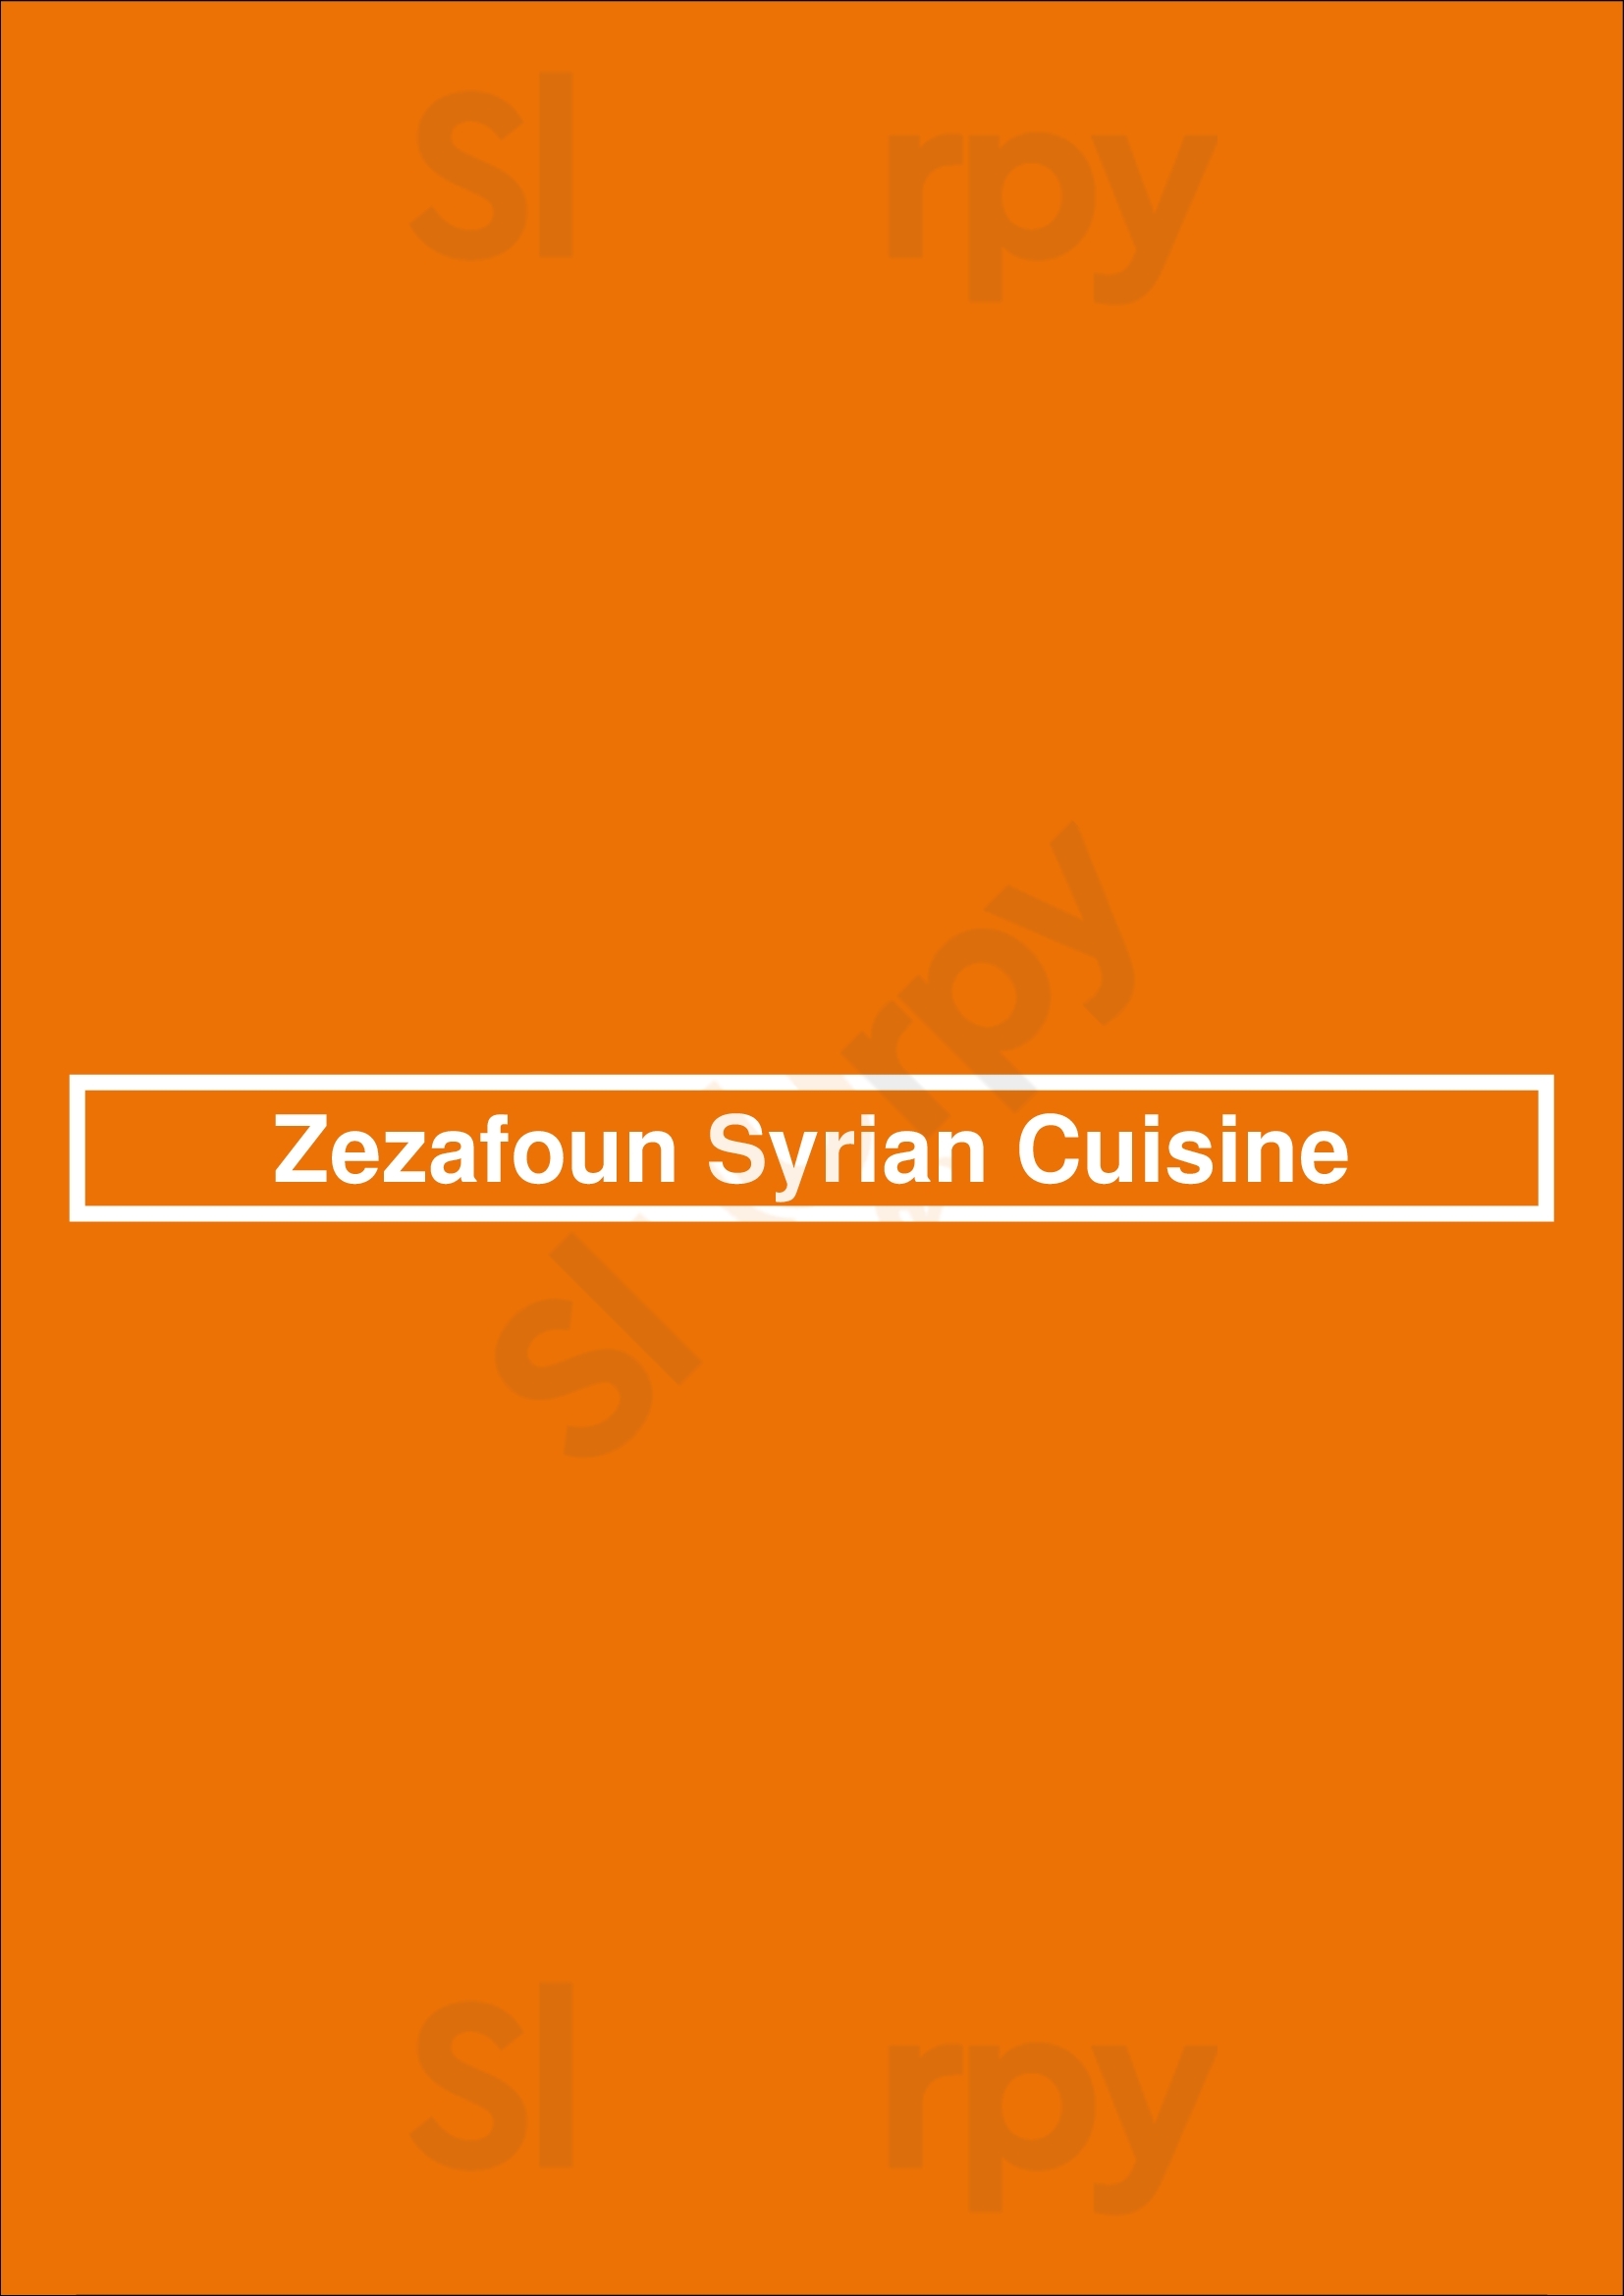 Zezafoun Syrian Cuisine Toronto Menu - 1